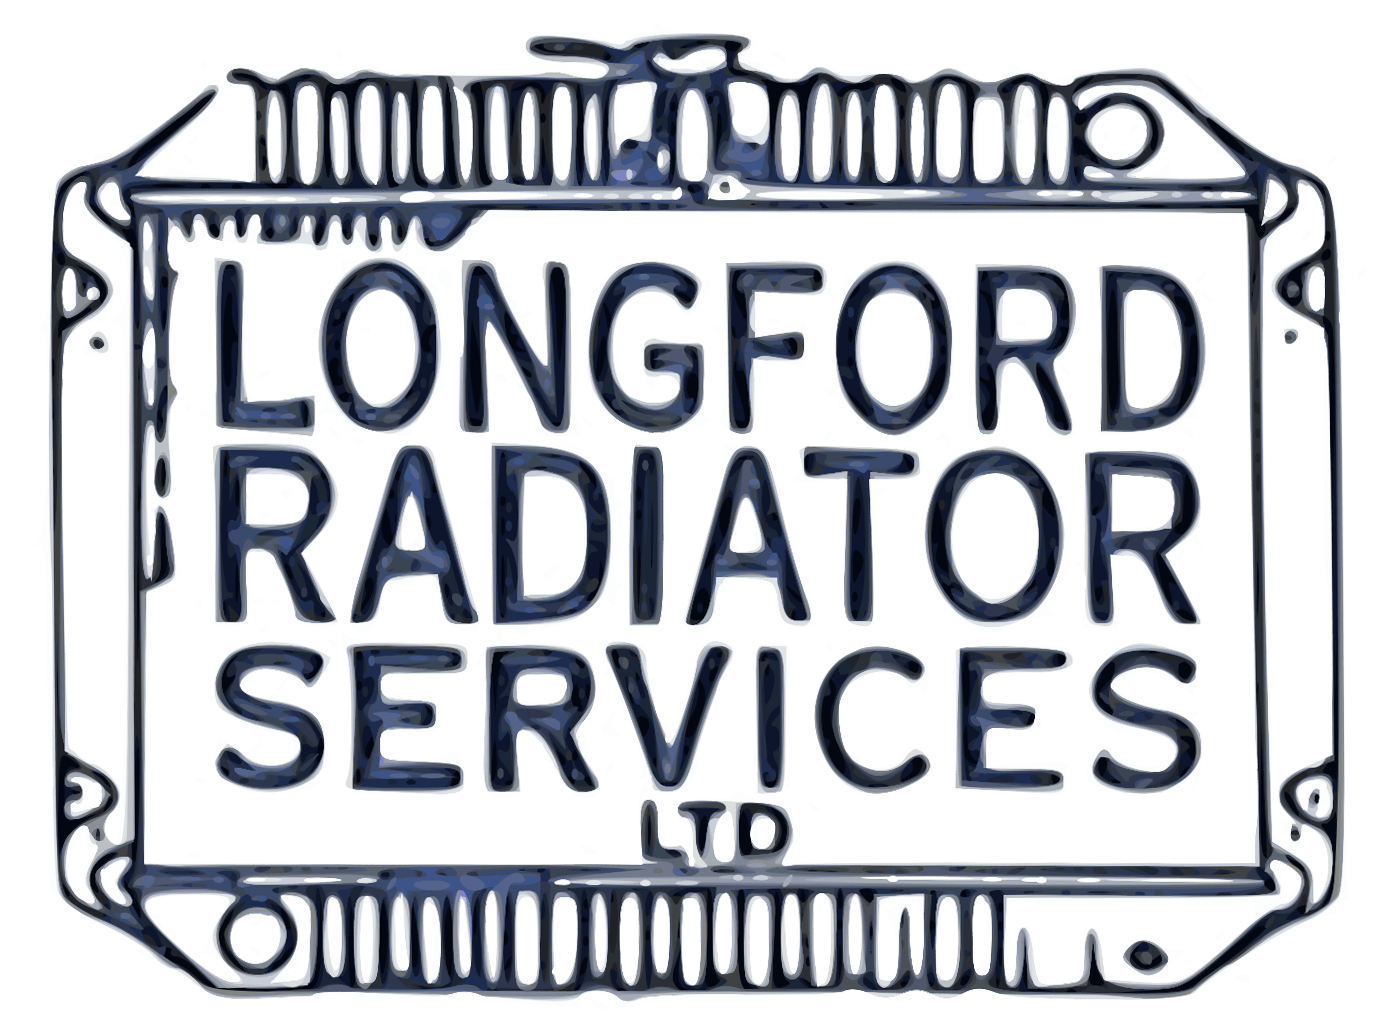 The Longford Radiator Services Ltd logo